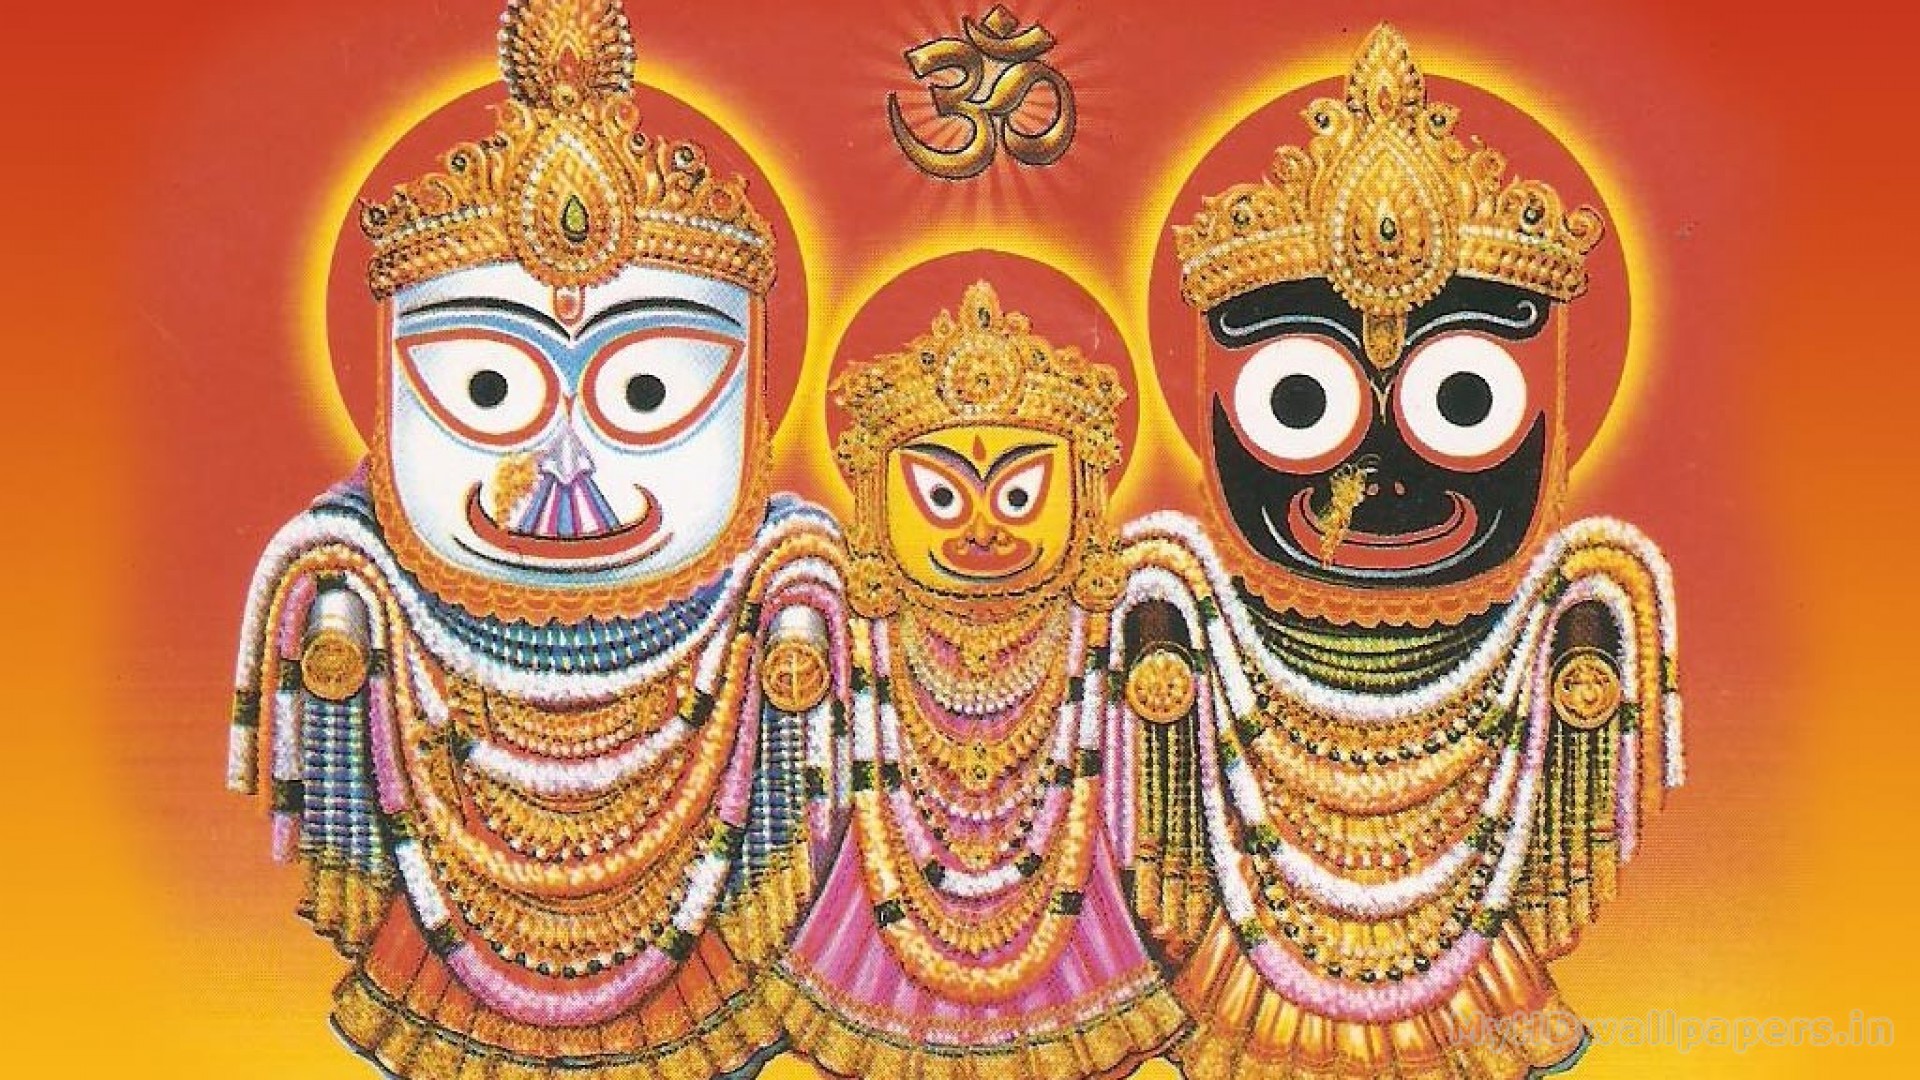 Hindu God Live Wallpaper Free Download For Pc  HinduWallpaper